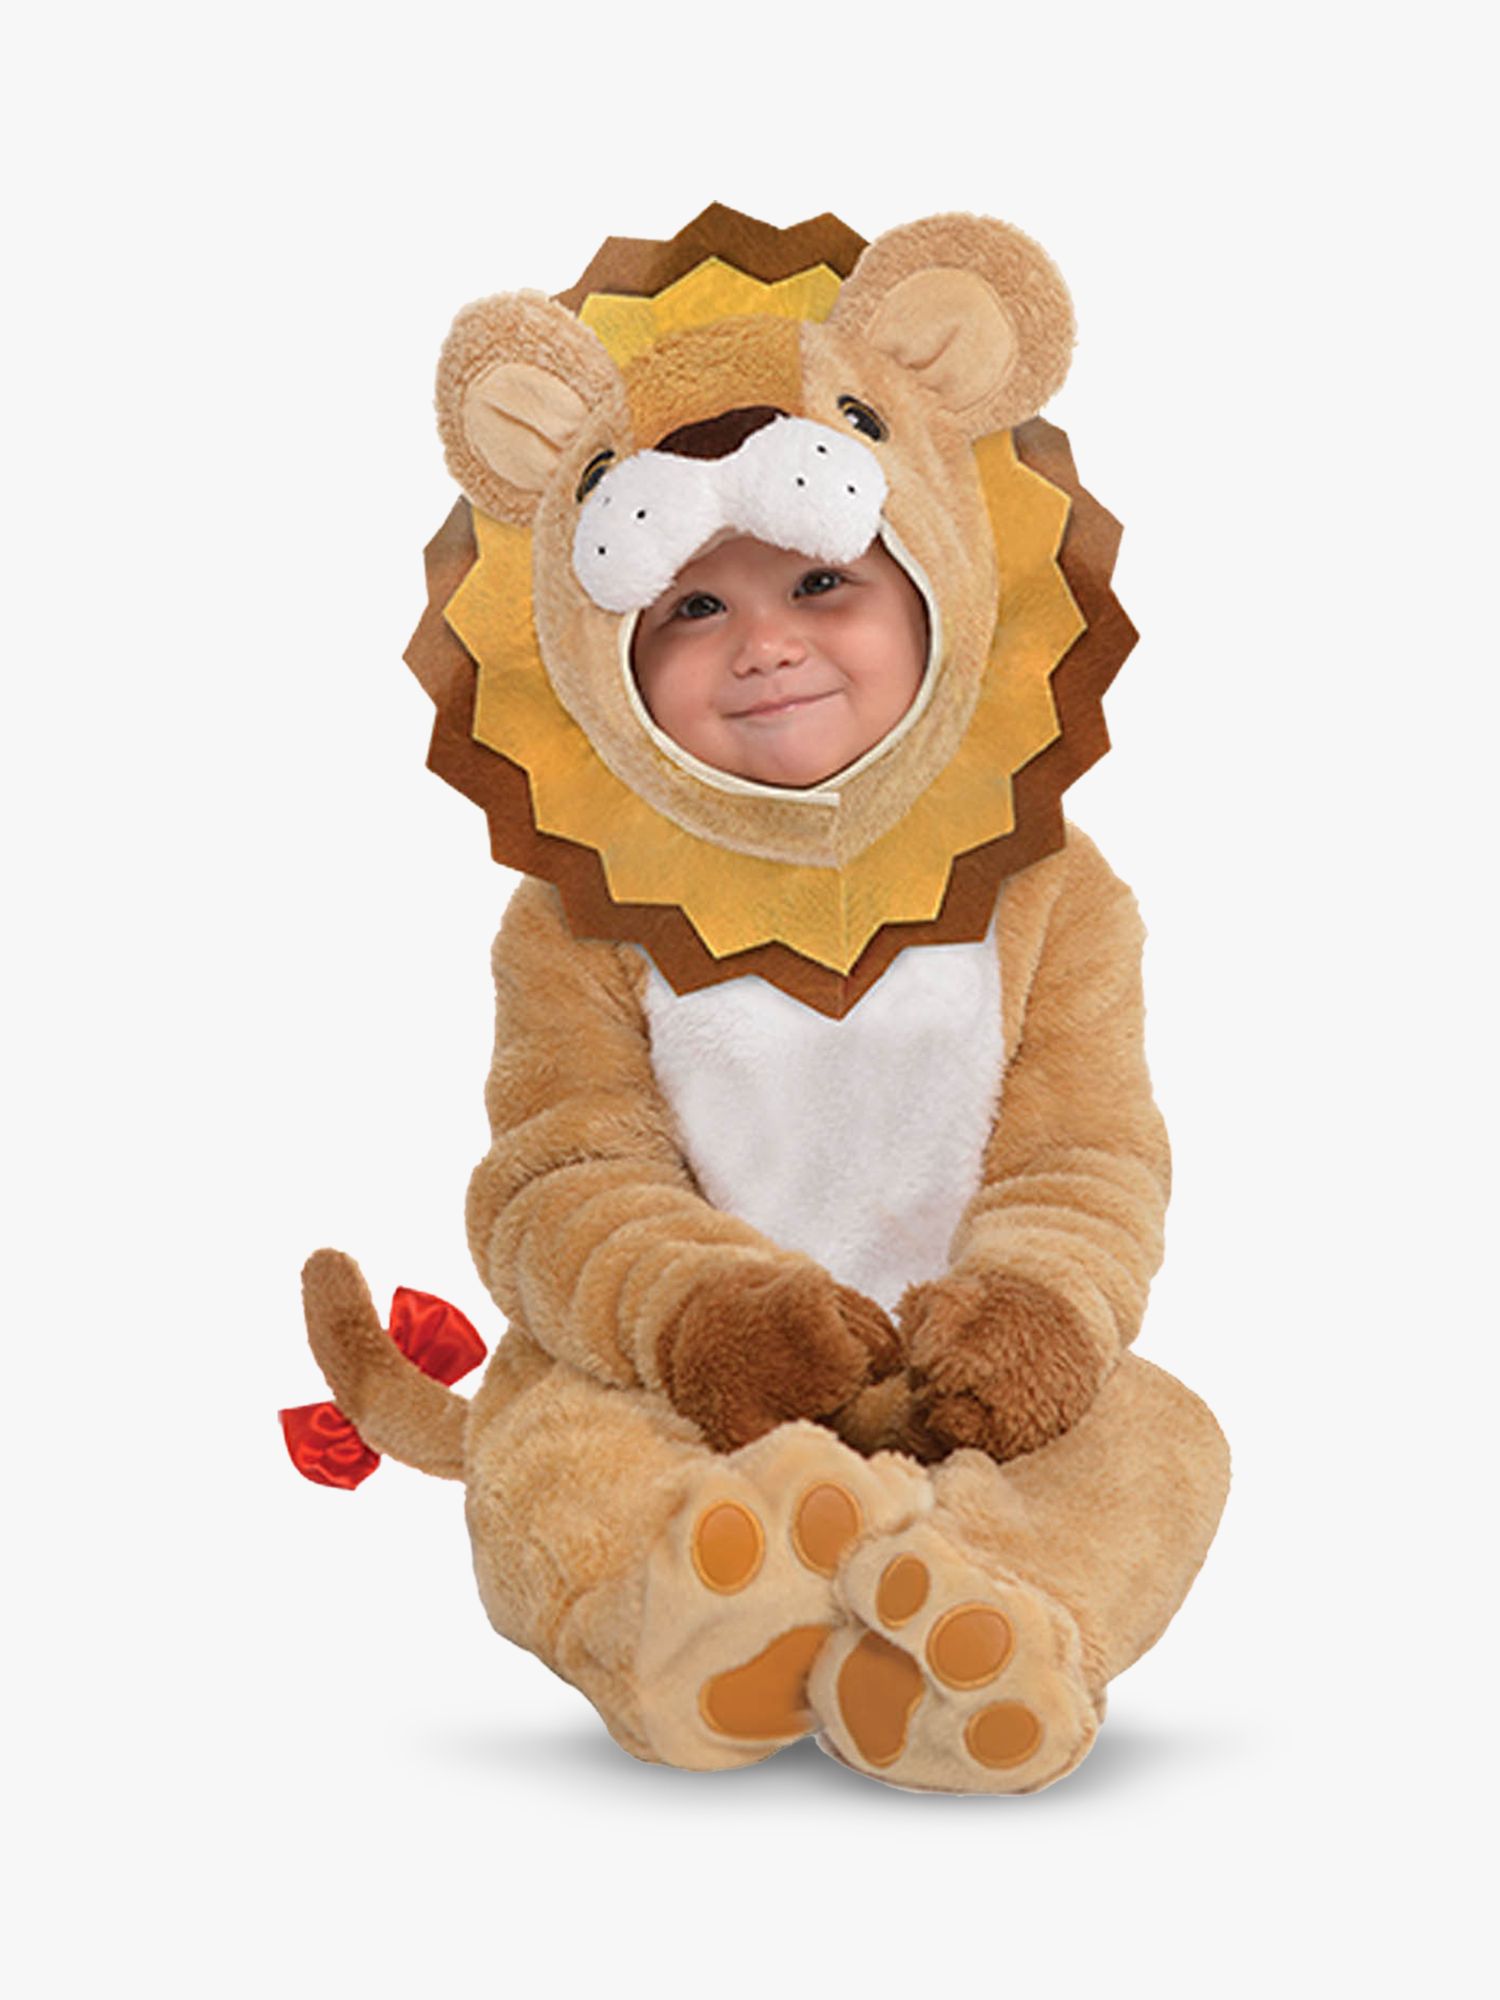 Little Roar Lion Children's Costume, 12-24 Months